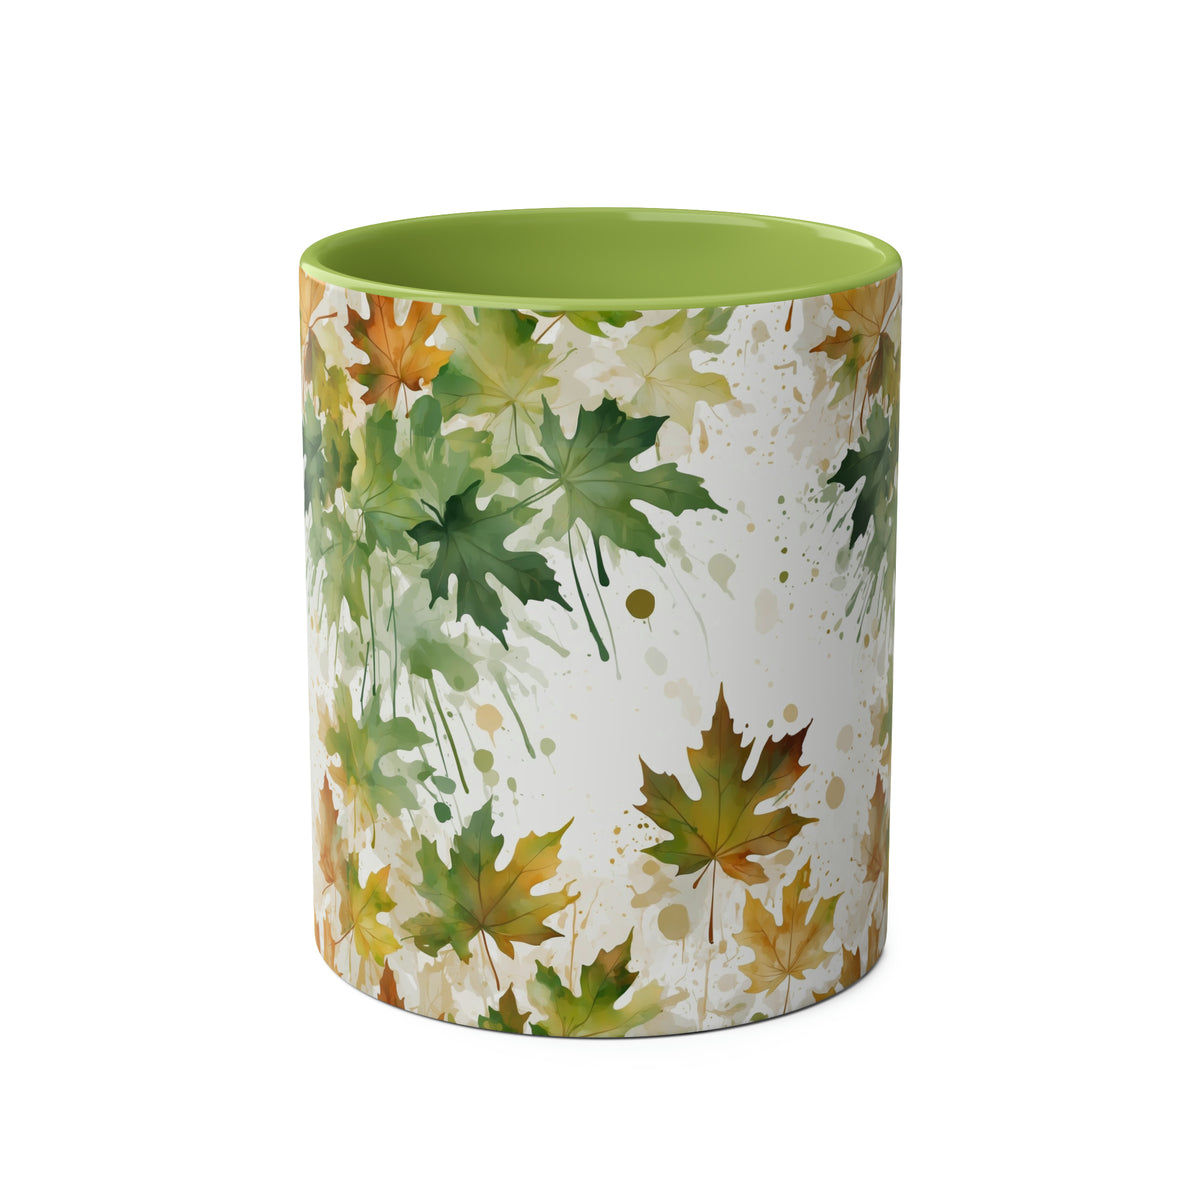 Maple Leaf Ceramic Coffee Cup